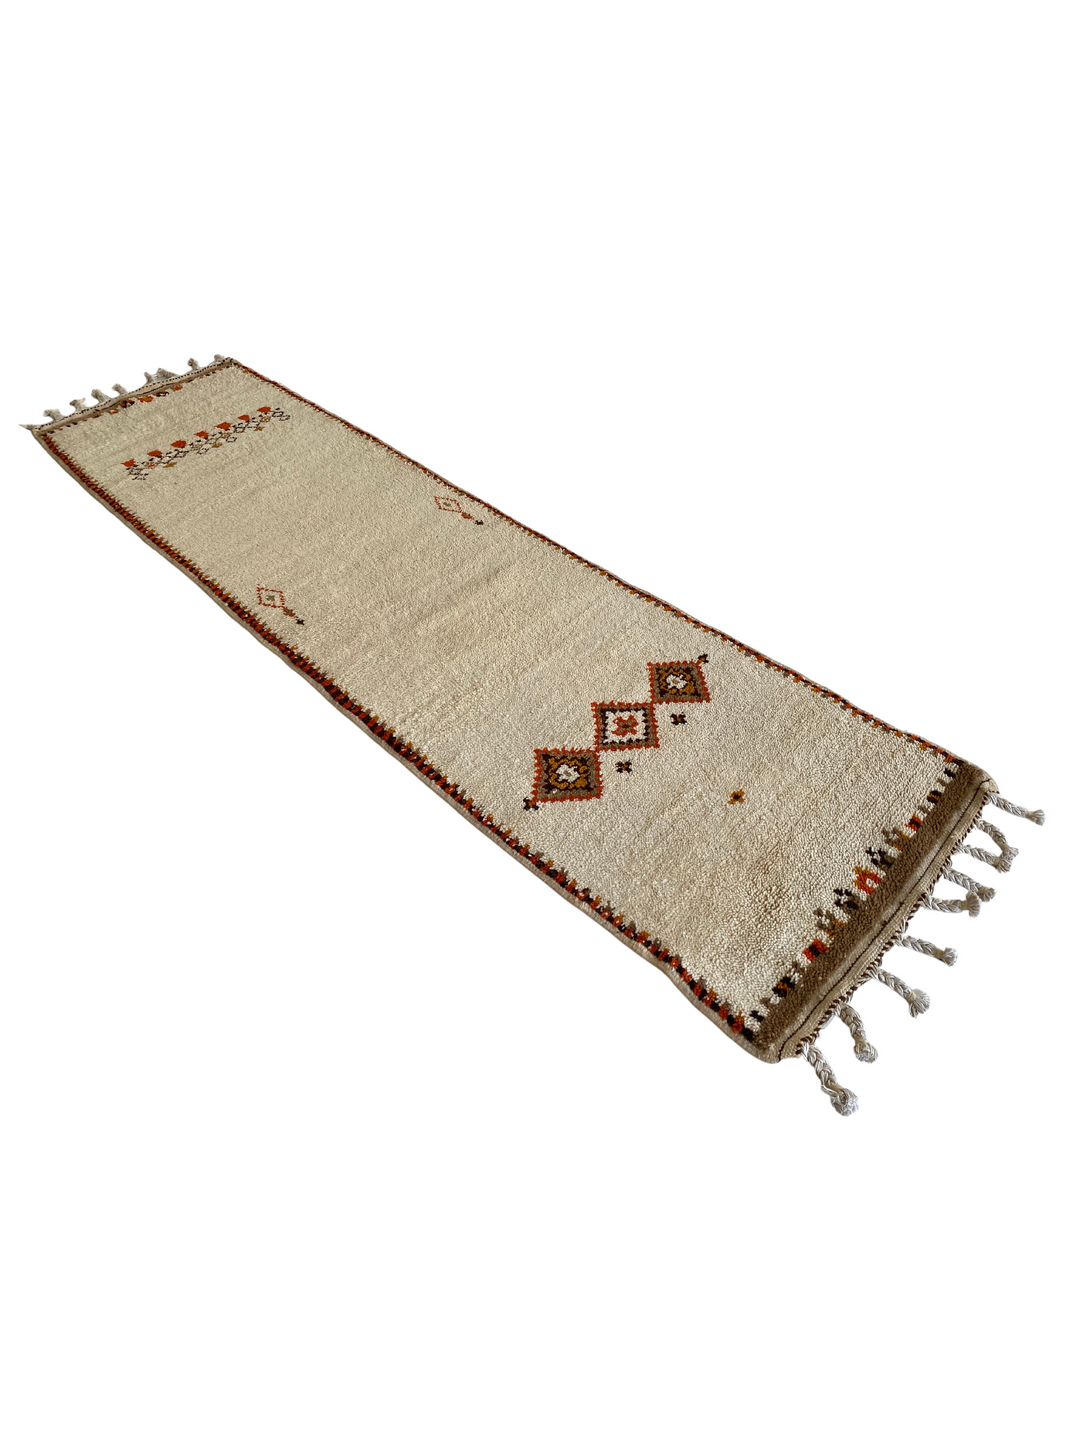 Mane - size: 9.6 x 2.7 - Imam Carpet Co